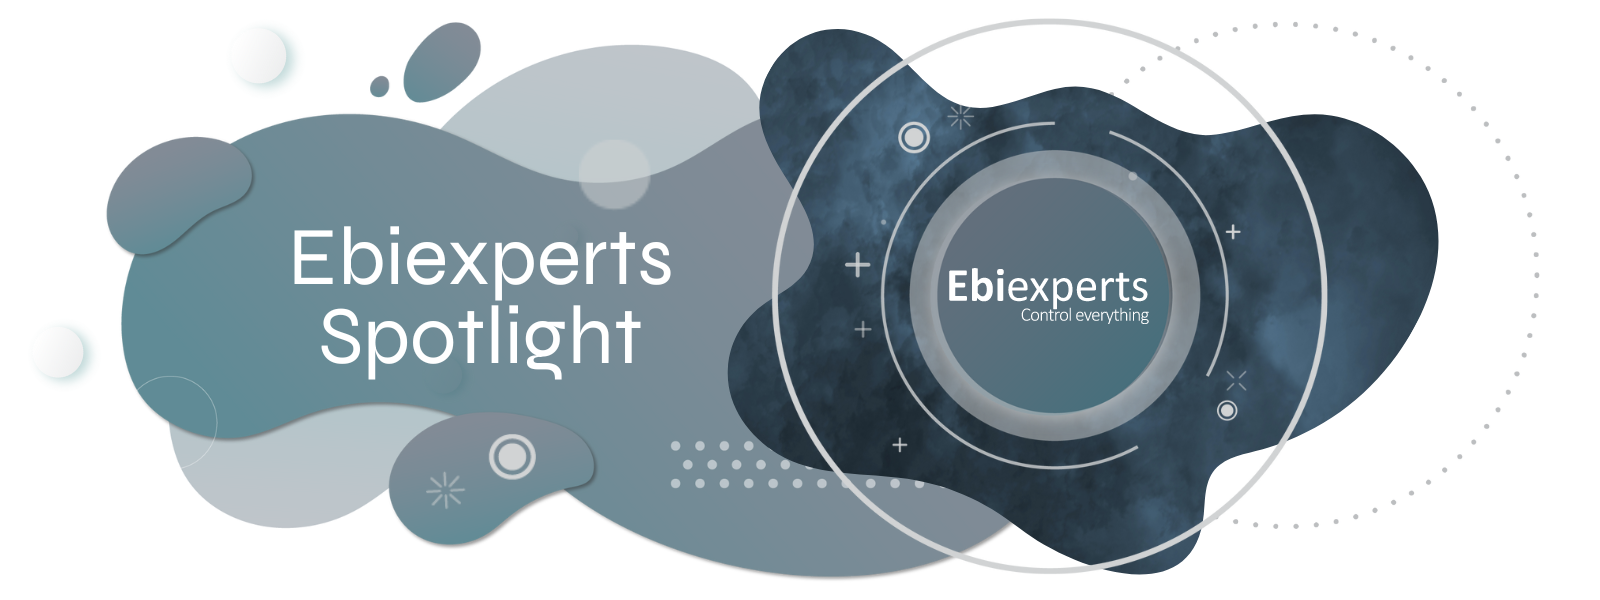 Ebiexperts Spotlight